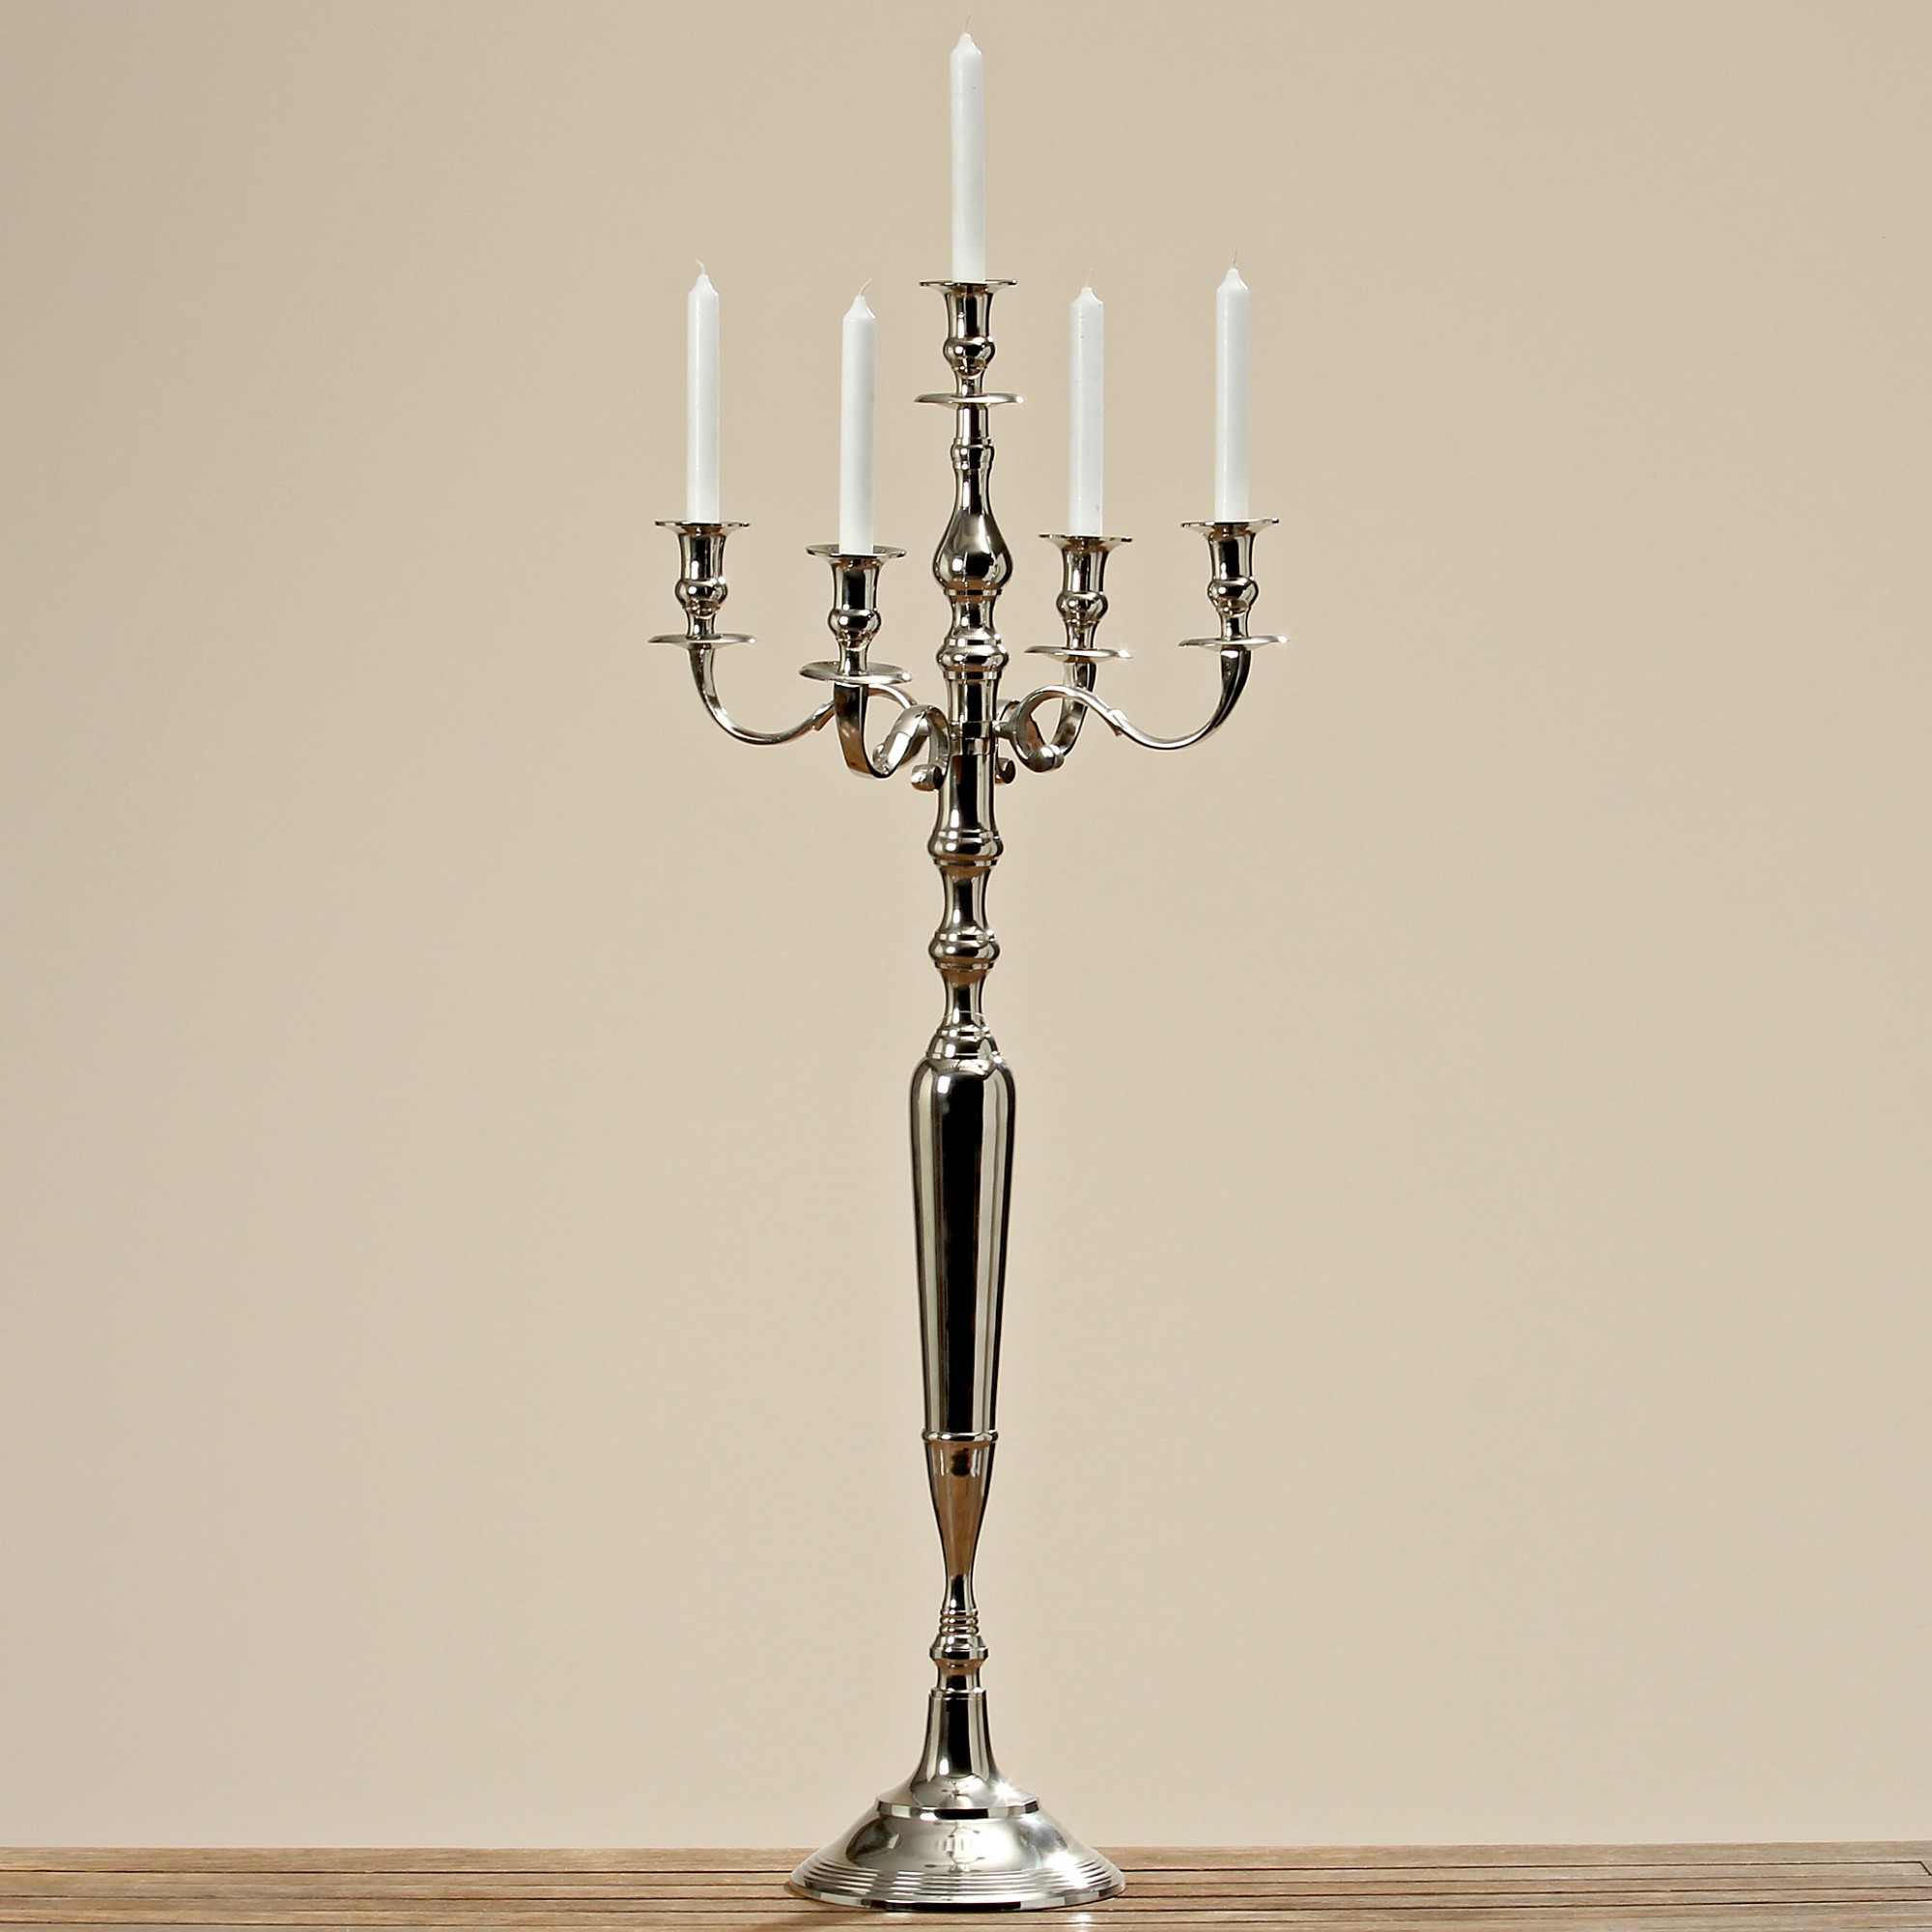 110cm Kerzenleuchter Weiß Antik Barock Kerzenständer Kerzenhalter